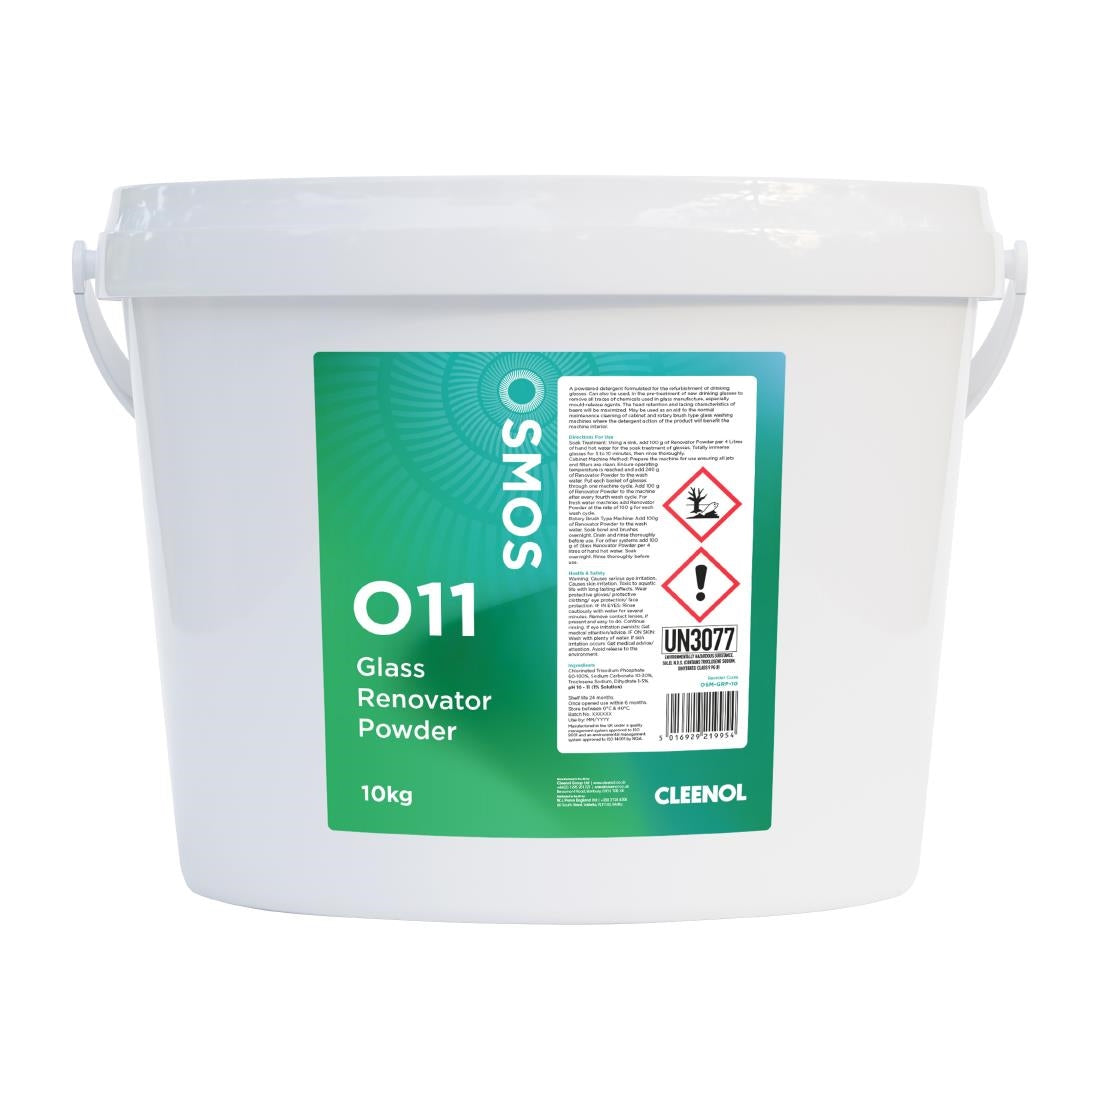 CU592 OSMOS Glass Renovator Powder (10kg) JD Catering Equipment Solutions Ltd